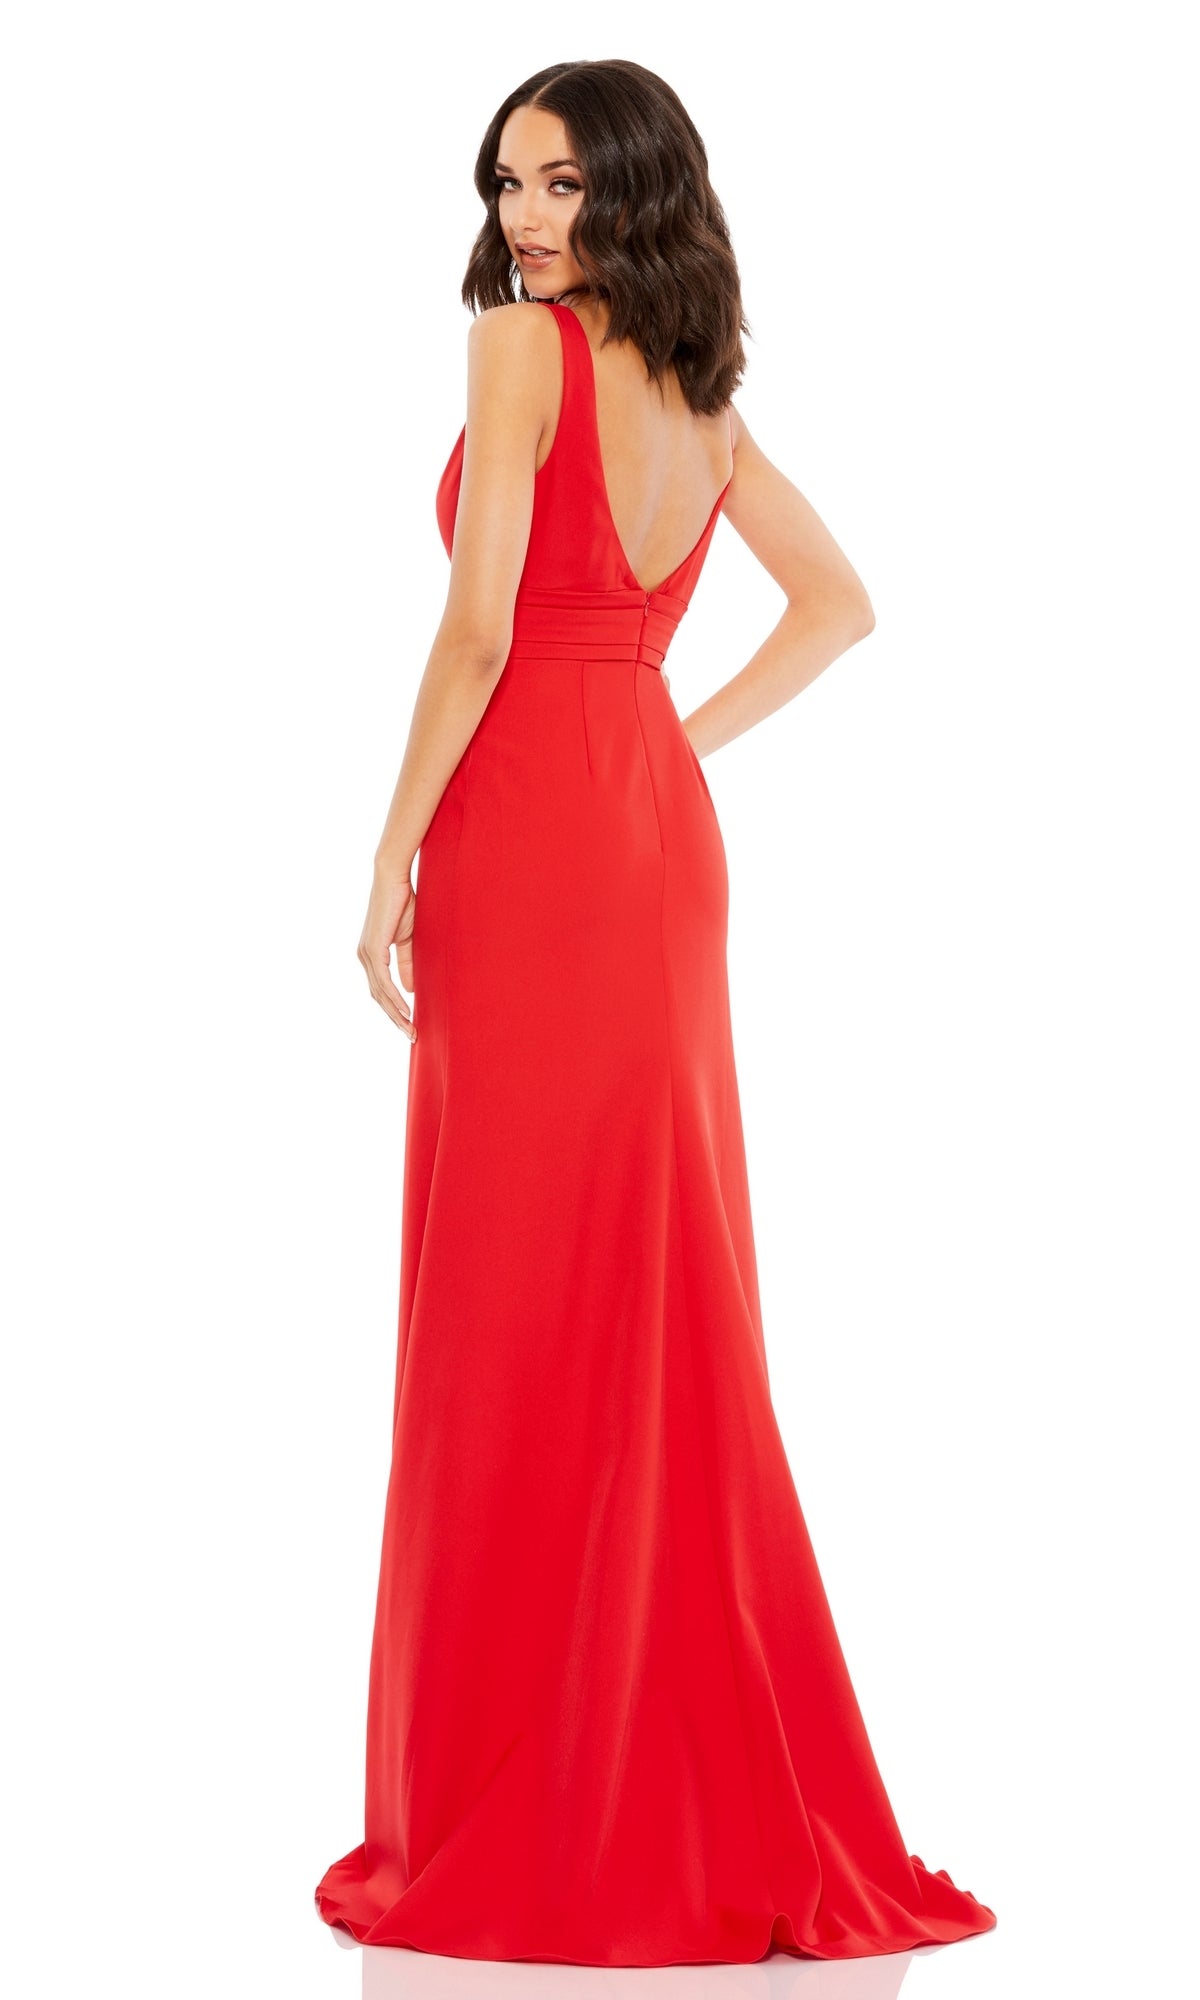 Long Formal Dress 49454 by Mac Duggal